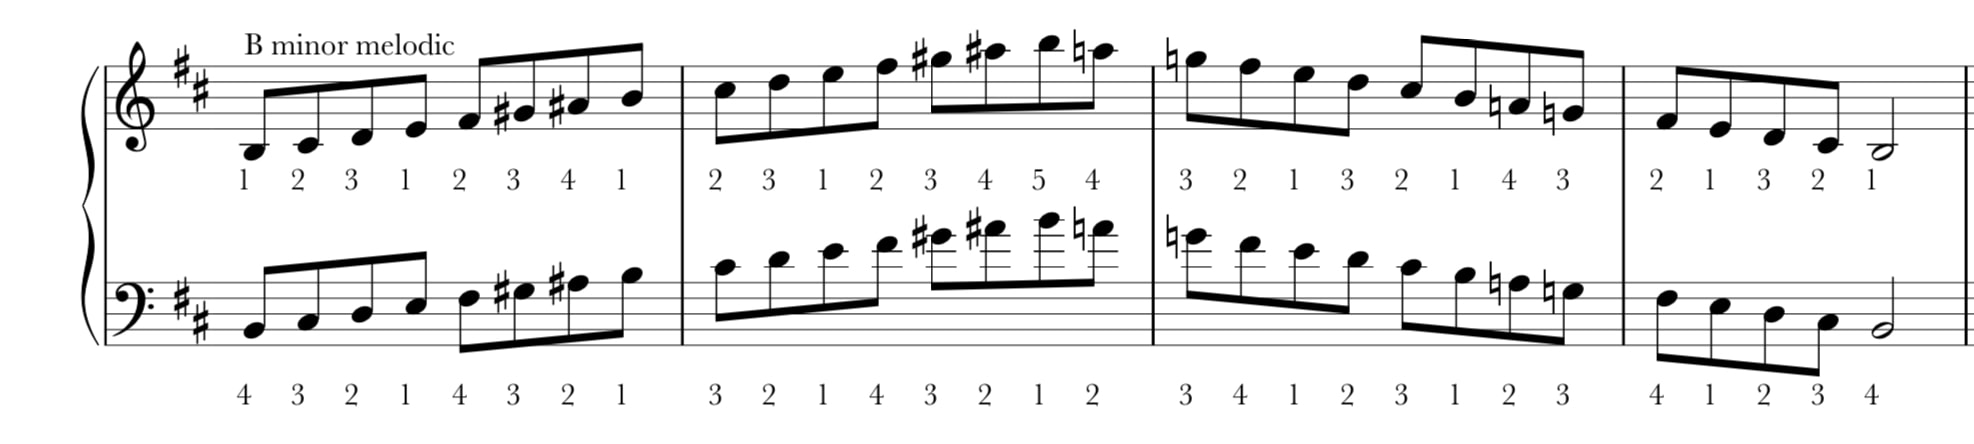 melodic minor scale